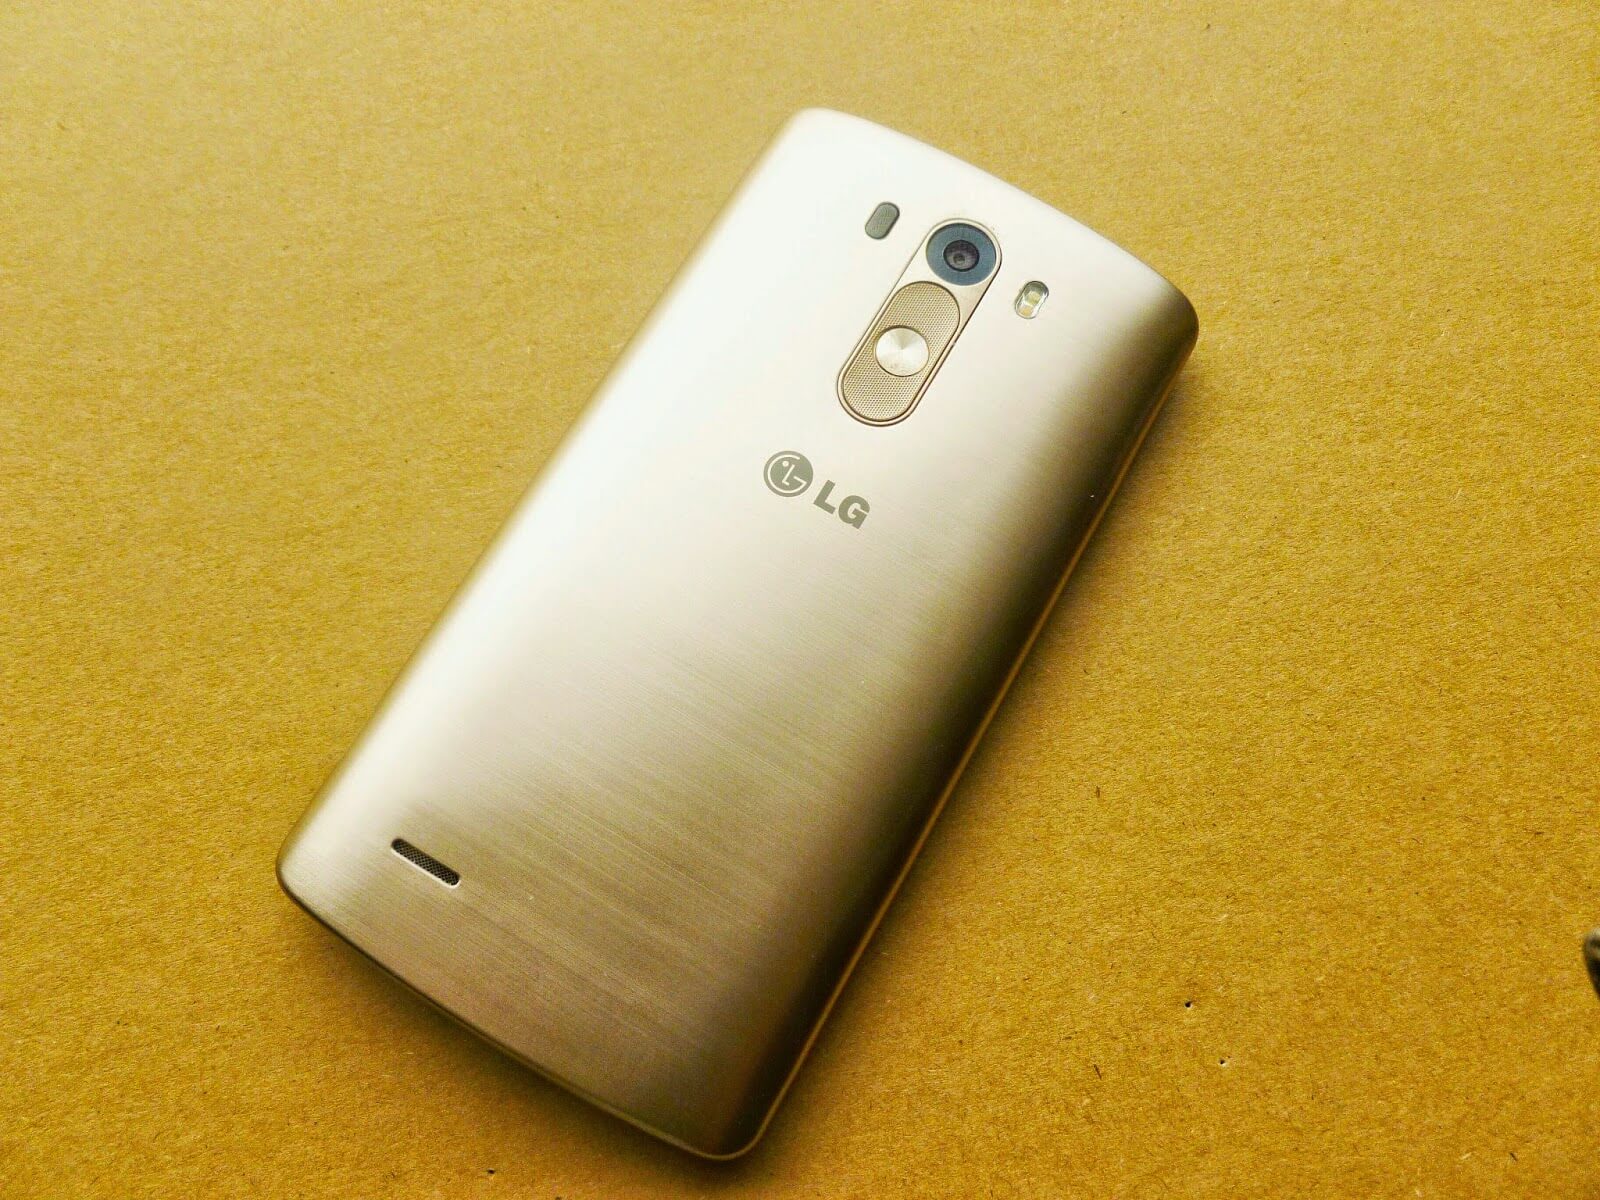 LG G3 Shine Gold